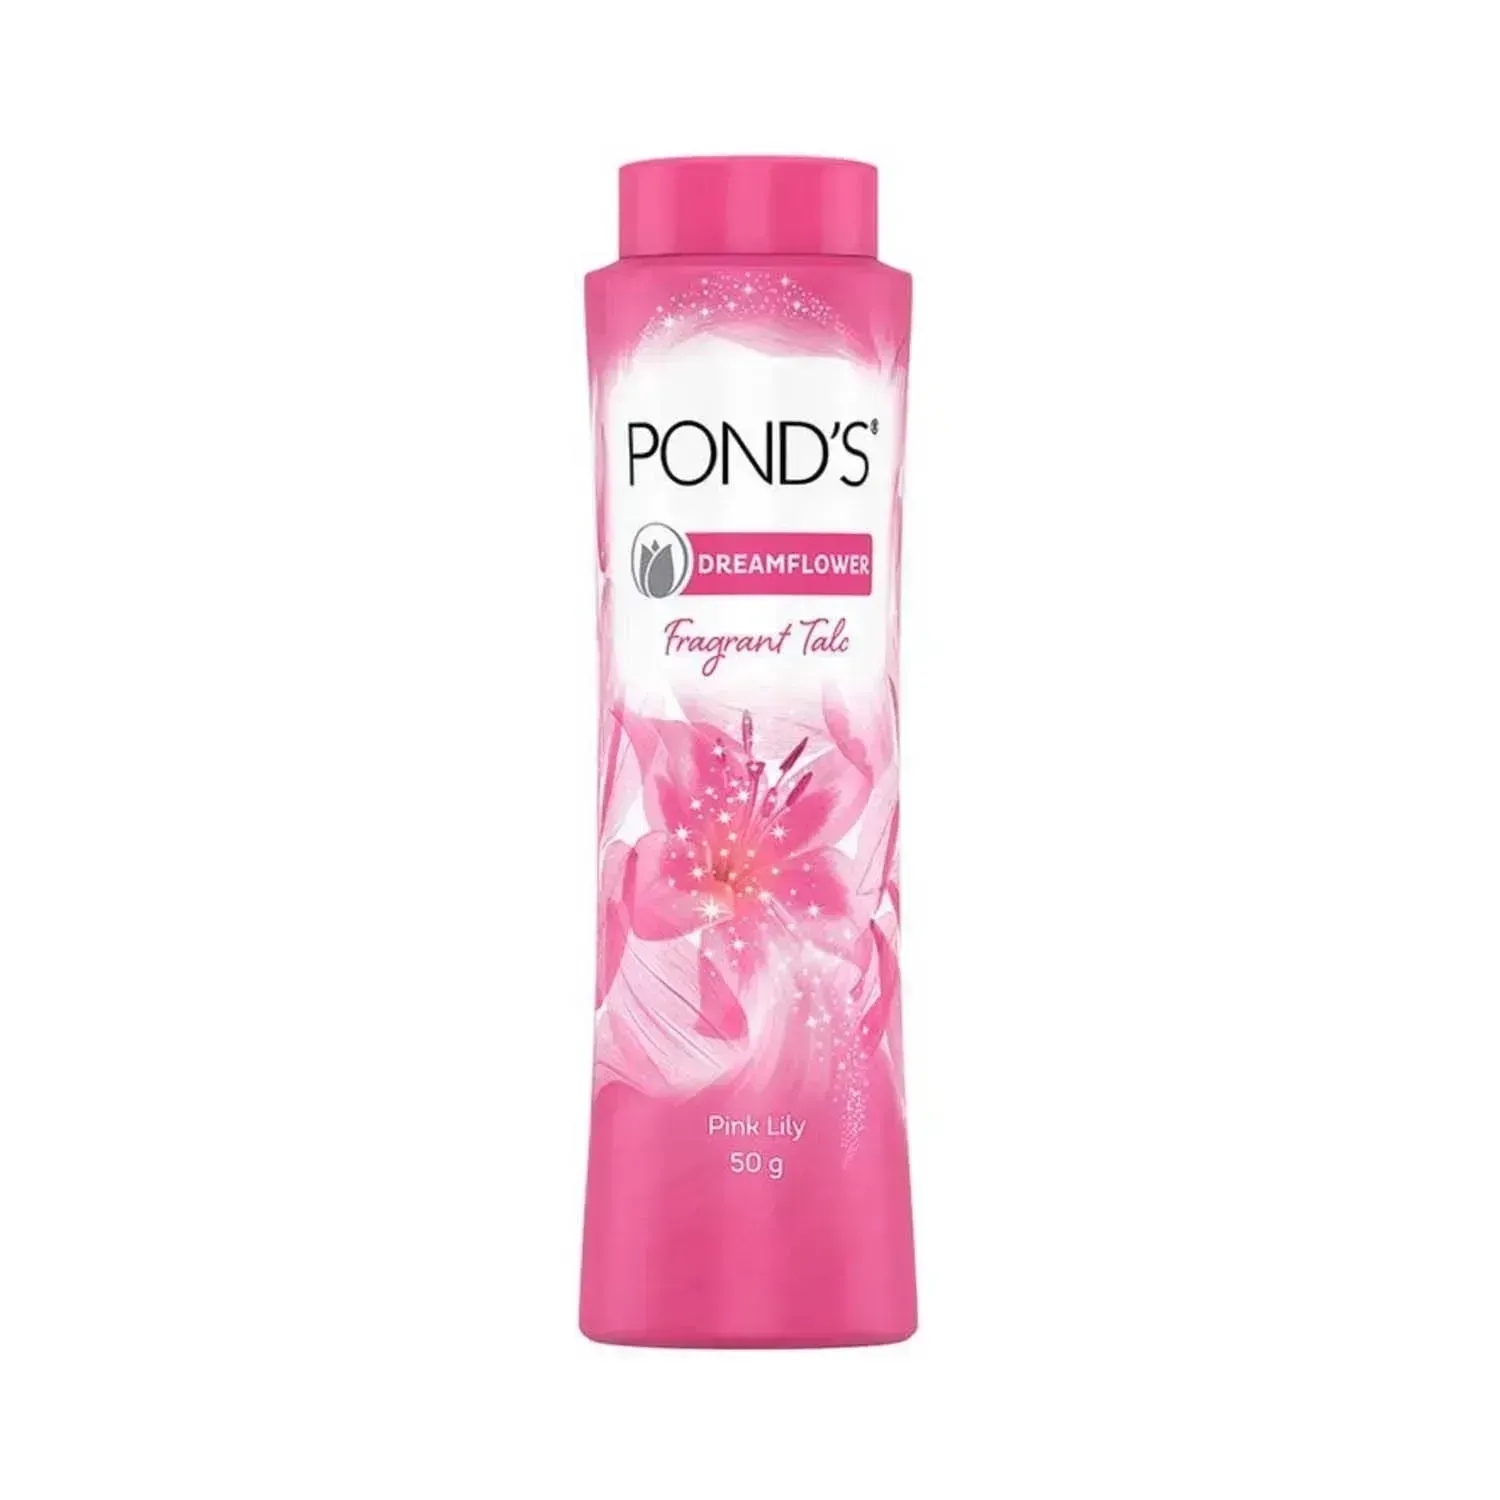 Pond's | Pond's Dreamflower Fragrant Pink Lily Talc Powder - (50g)